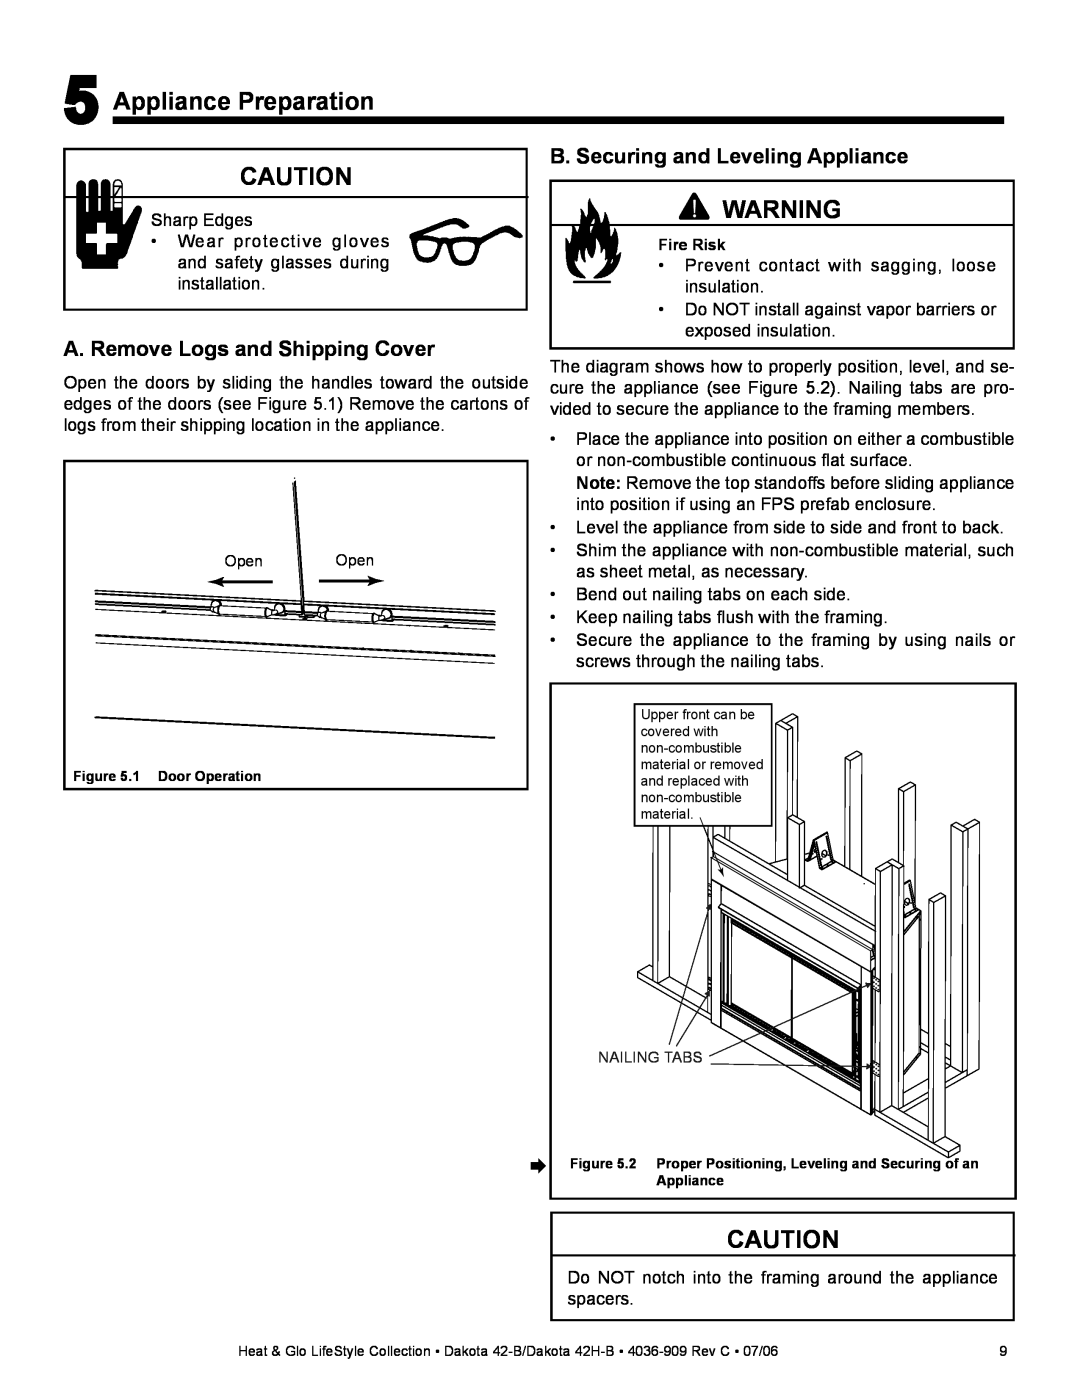 Heat & Glo LifeStyle Heat & Glo Gas Appliance, Dakota 42-B Appliance Preparation, B. Securing and Leveling Appliance 